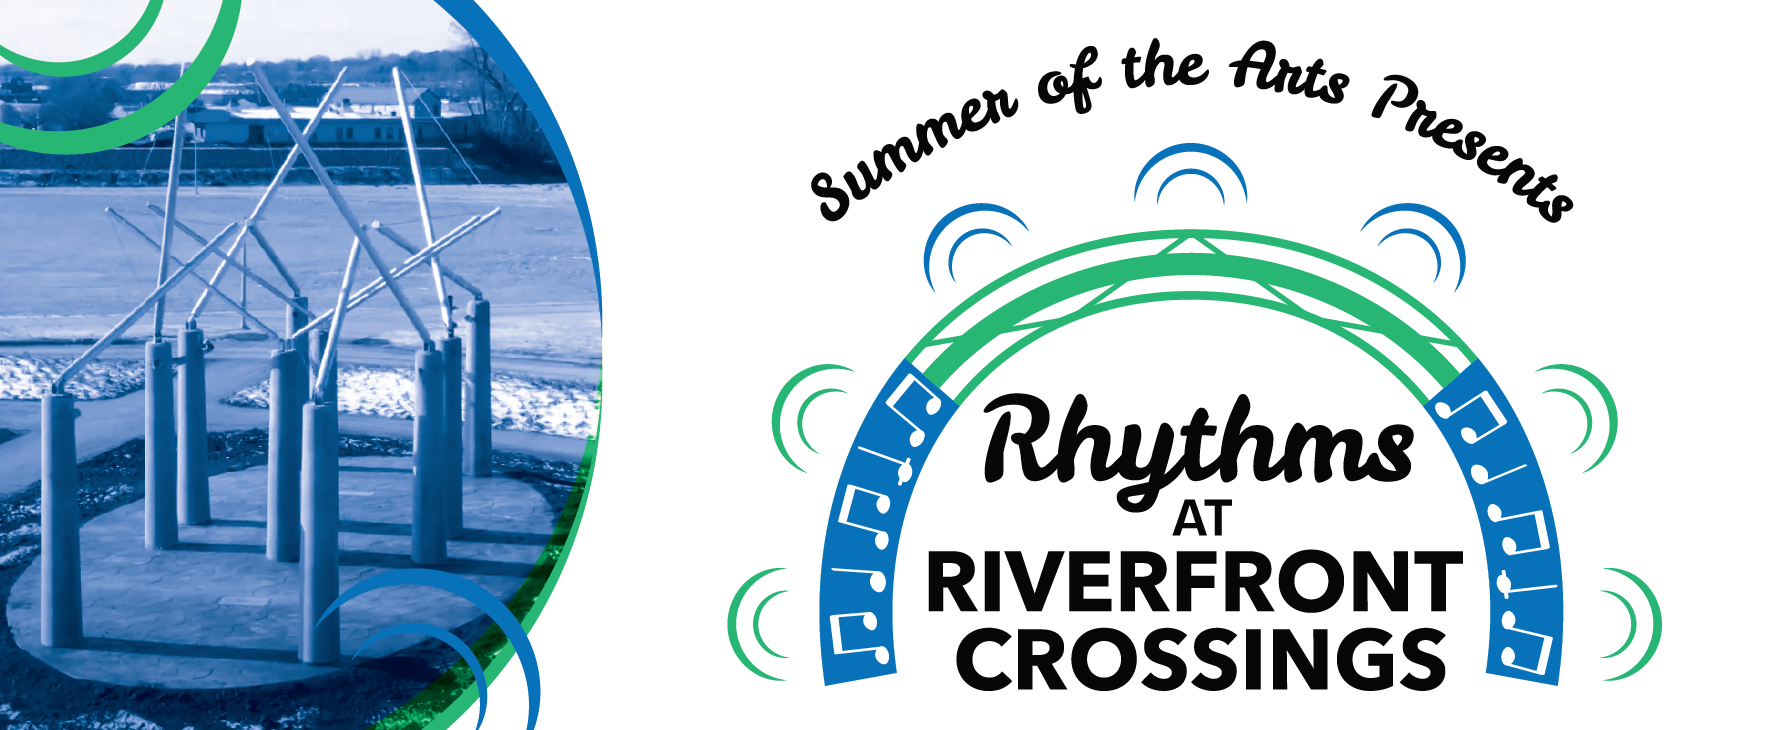 Rhythms at Riverfront Crossings event logo